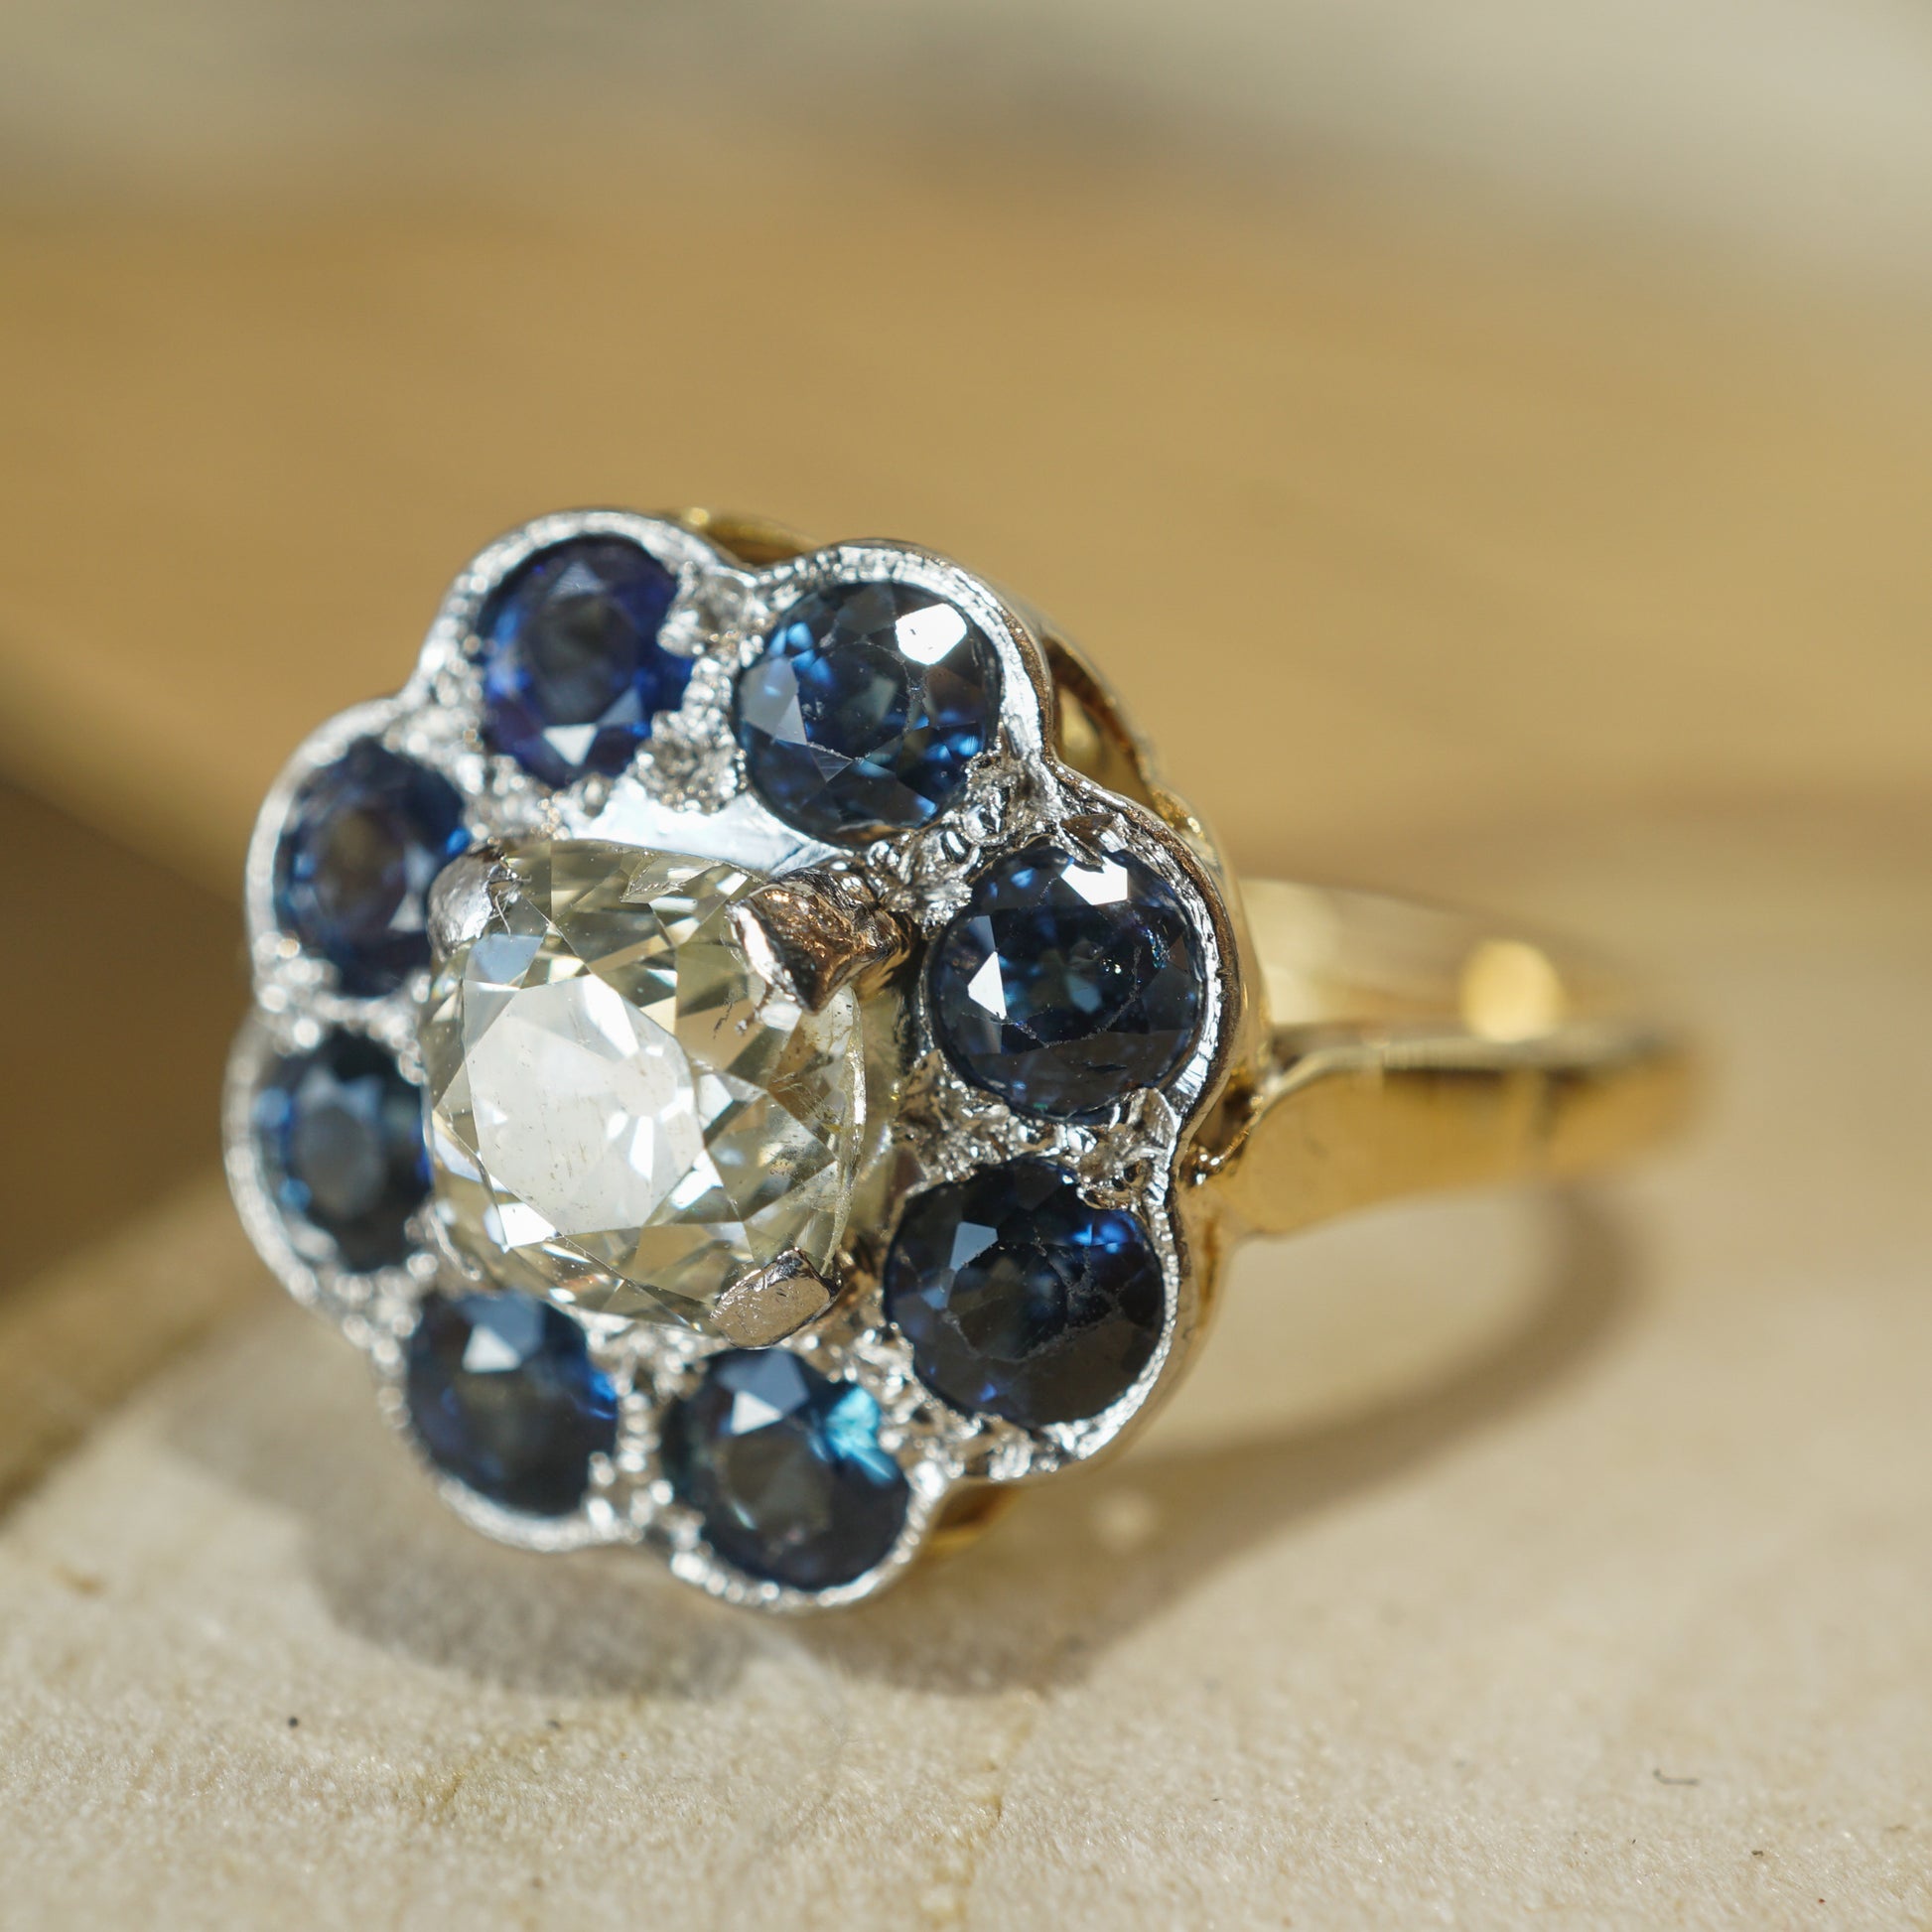 Victorian Sapphire Halo Diamond Engagement Ring in 18k & PlatinumComposition: Platinum/18 Karat Yellow Gold Ring Size: 7.25 Total Diamond Weight: .91ct Total Gram Weight: 5.3 g Inscription: 18CT PLAT
      